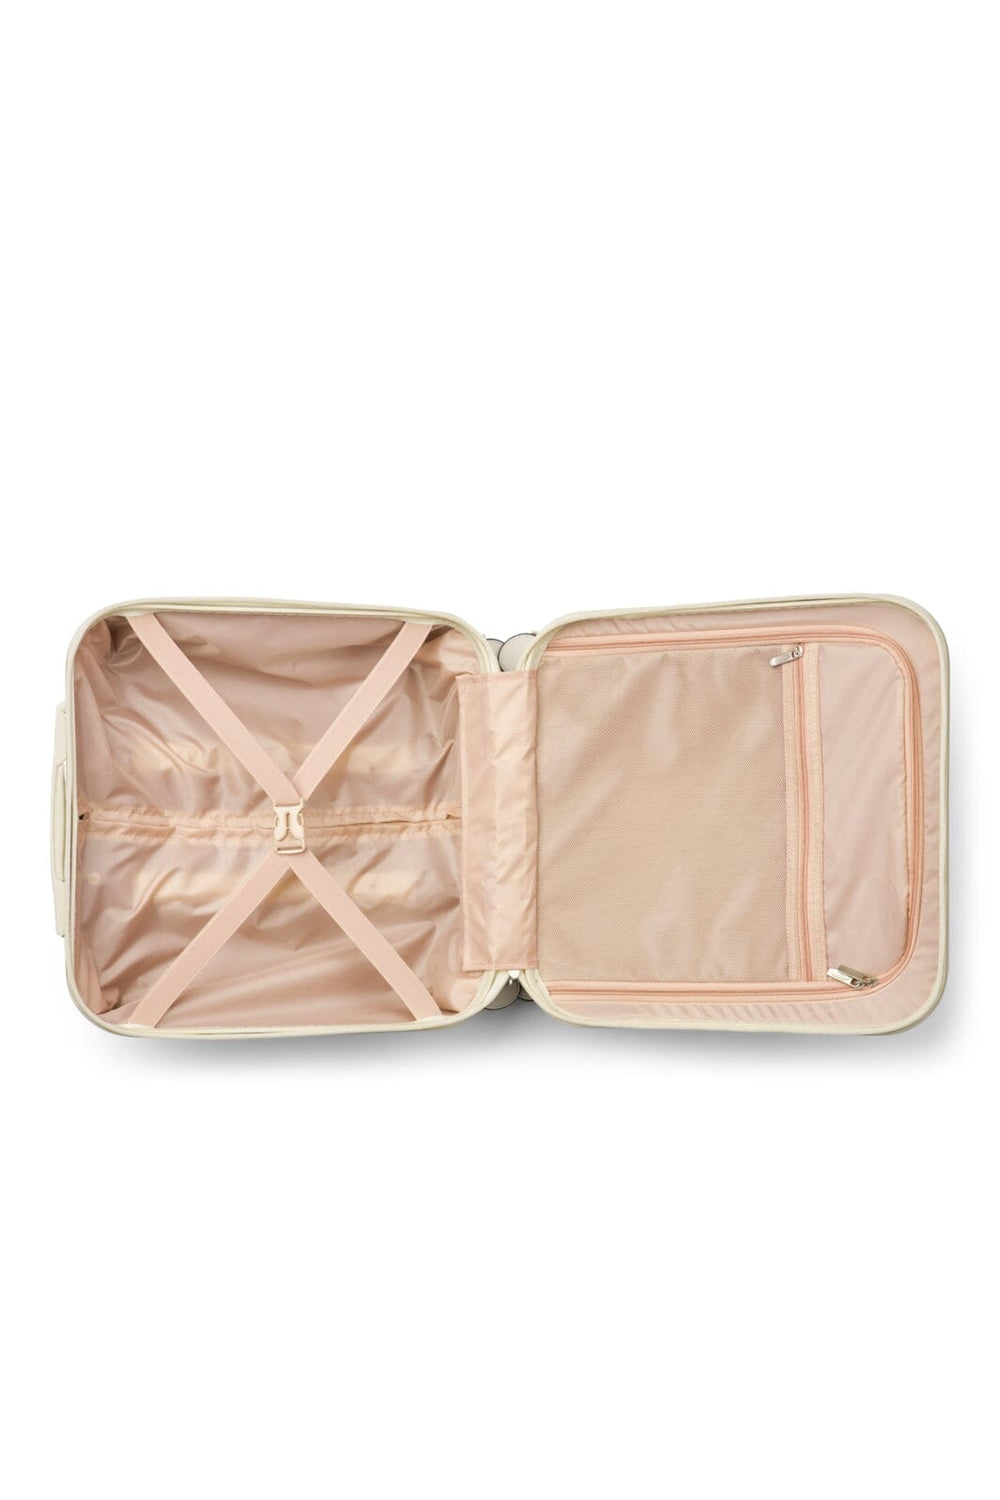 Liewood - Hollie Hardcase Suitcase - Peach / Sea Shell Tasker 